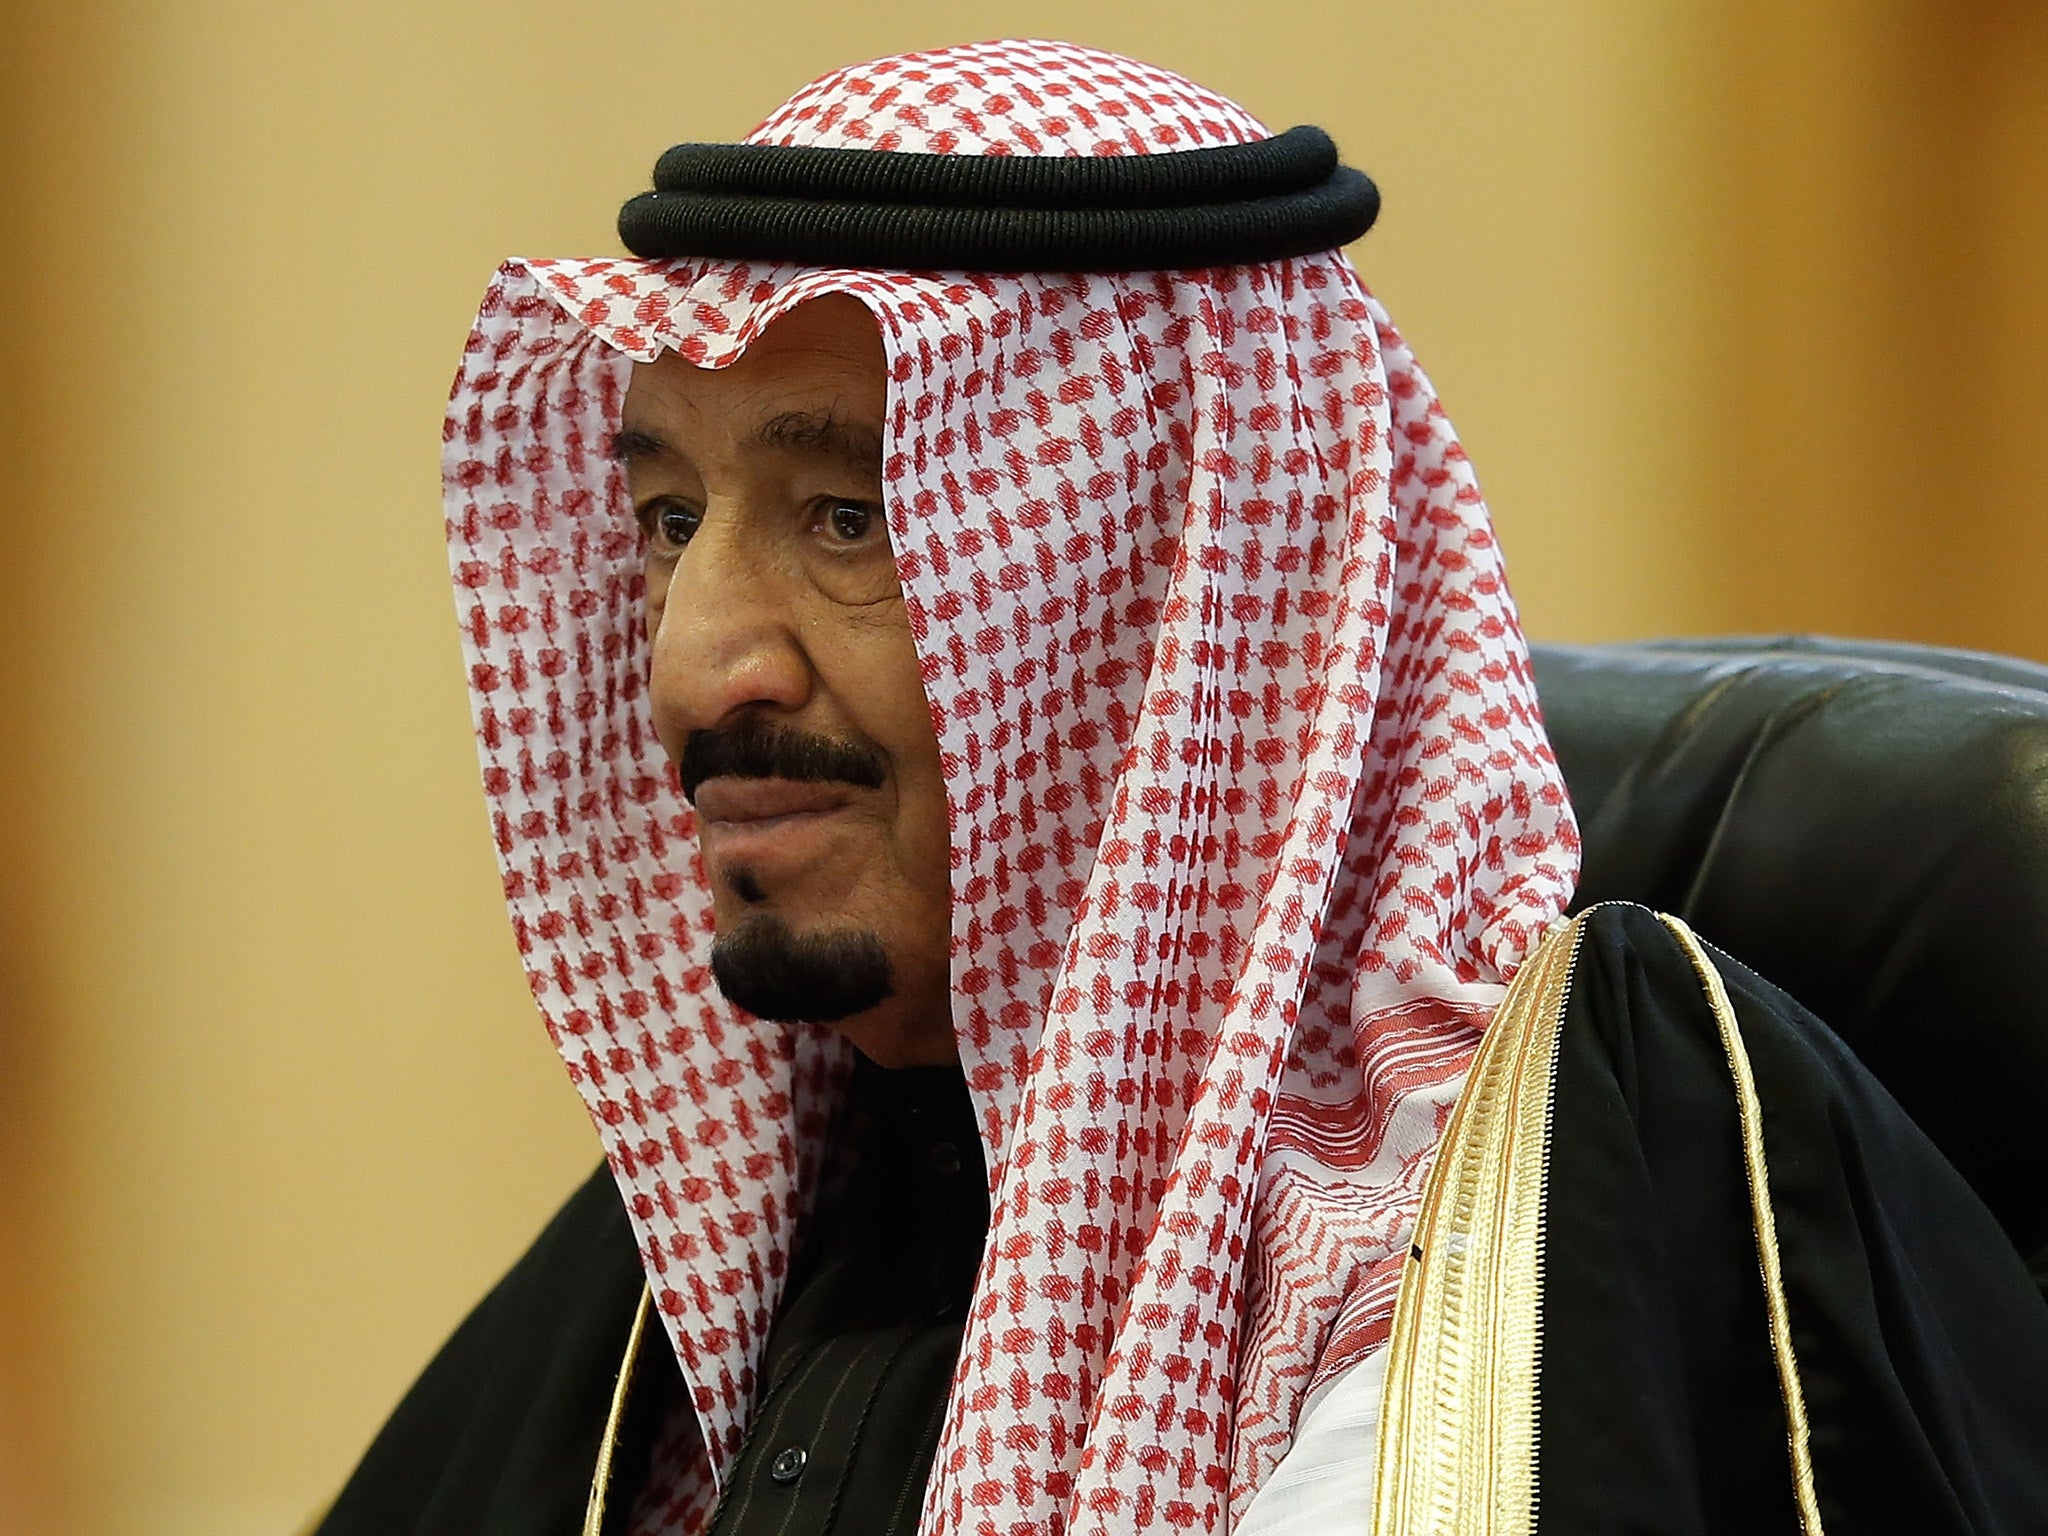 Salman became King of Saudi Arabia last month following the death of King Abdullah